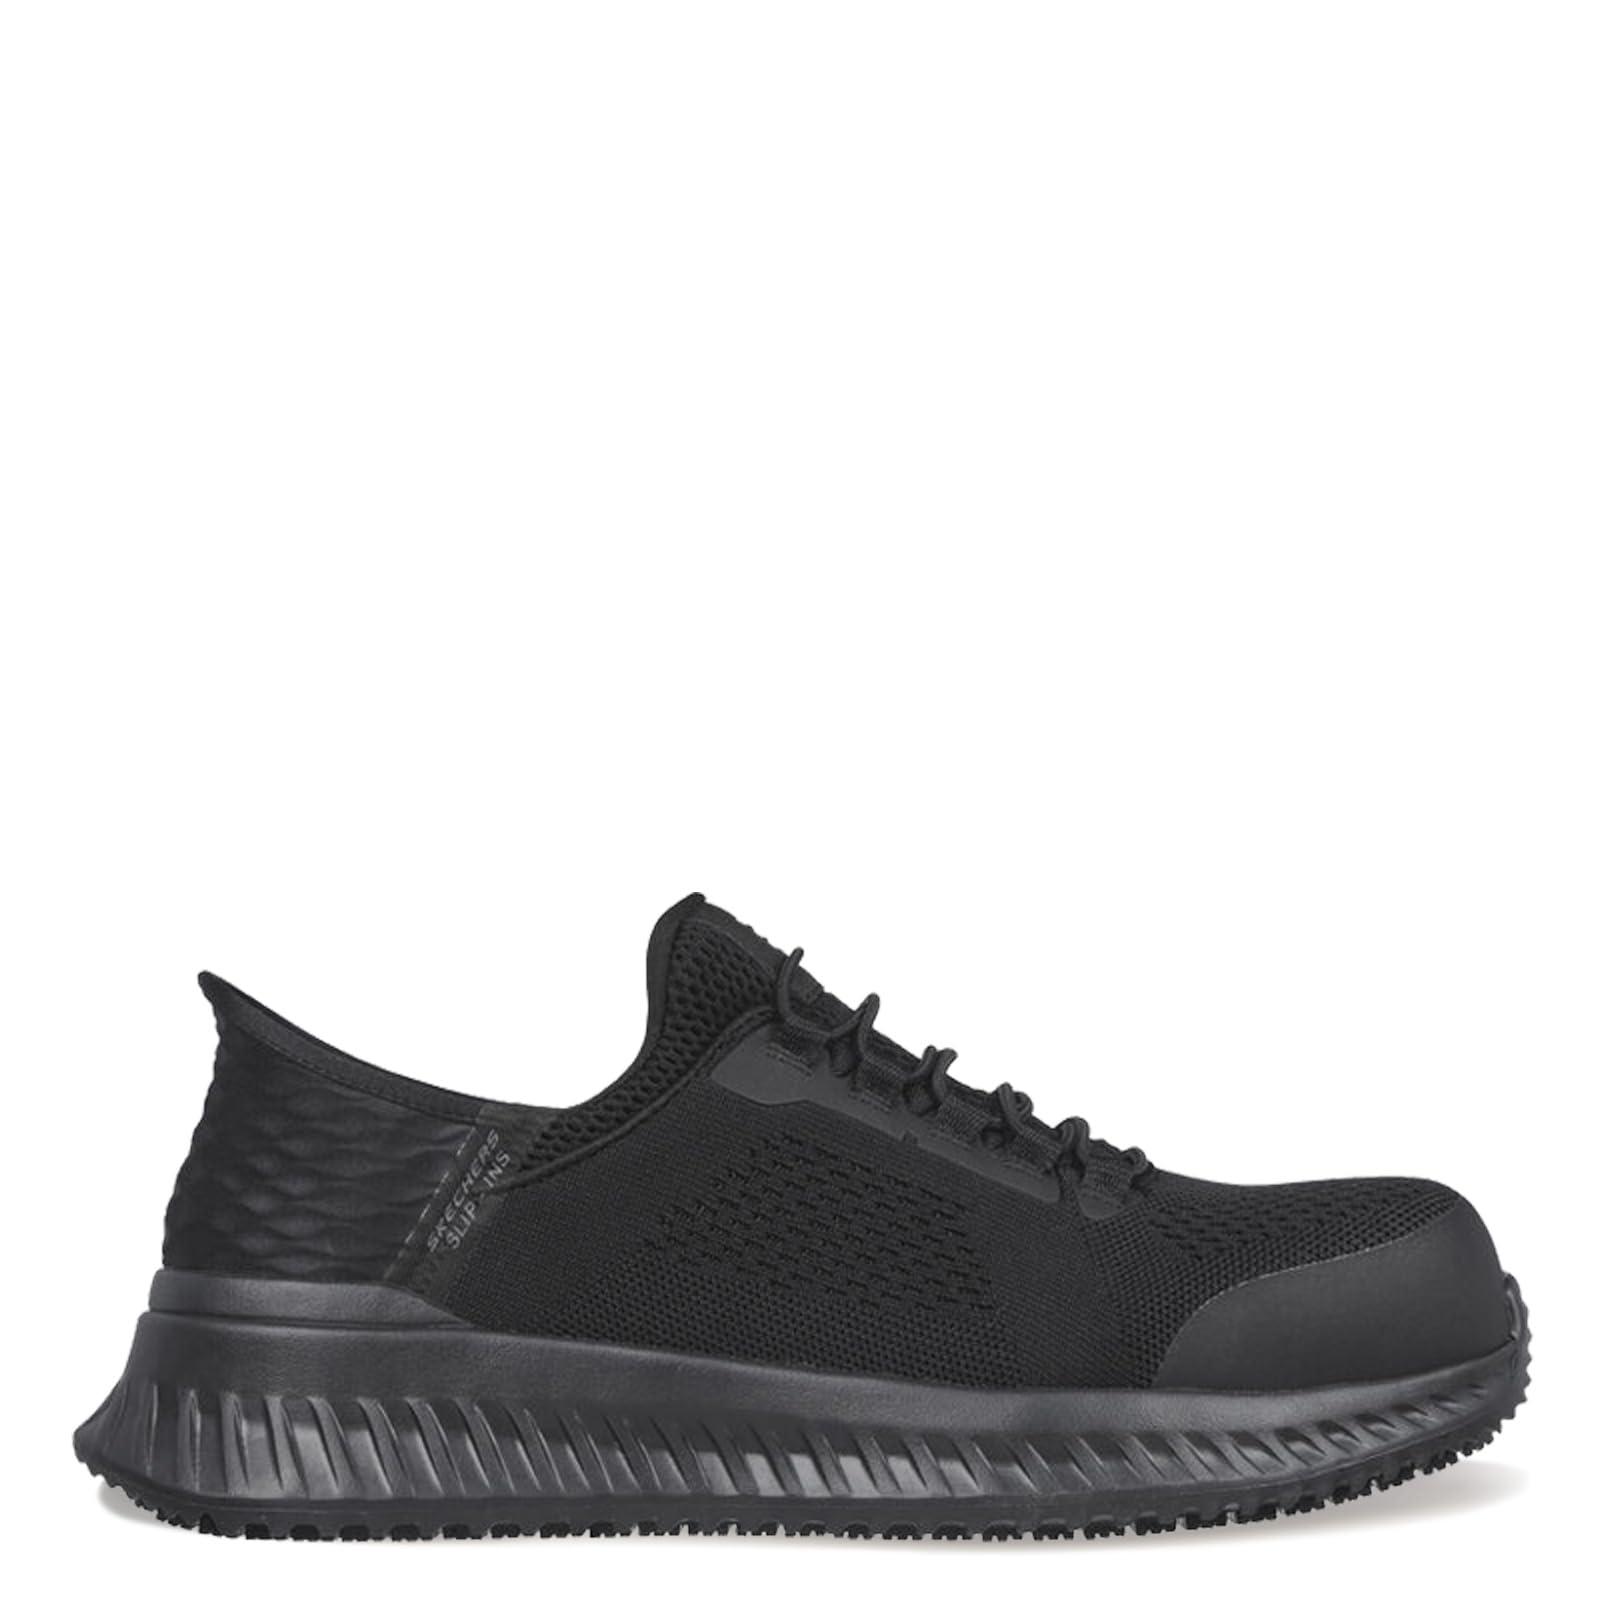 Skechers Men's, Slip-ins: Tilido - Fletchit Comp Toe Work Shoe Black